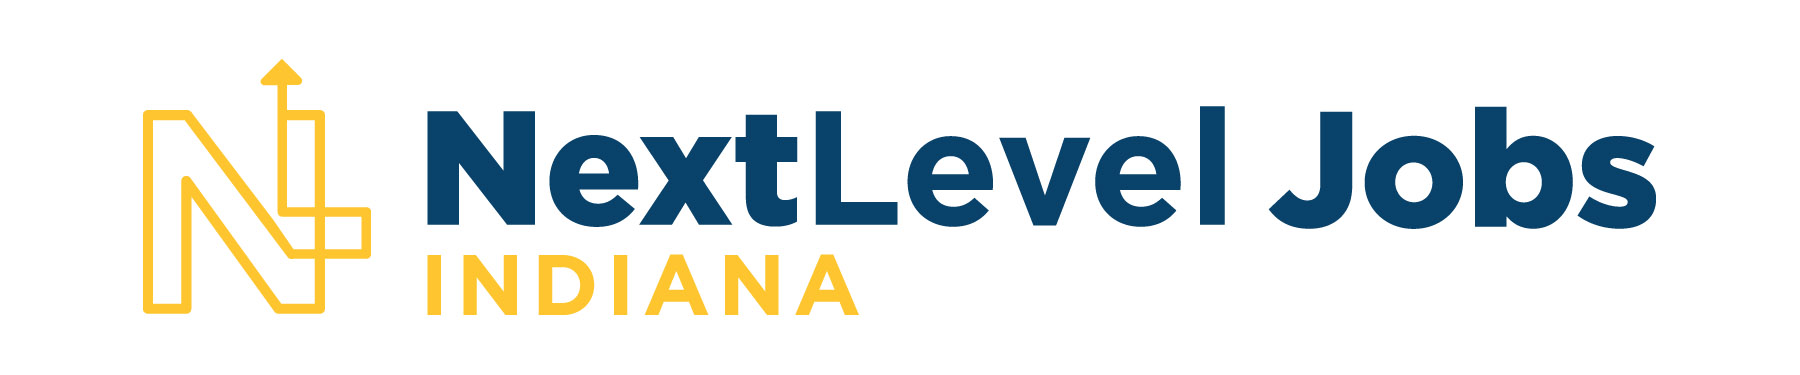 Next Level Jobs logo